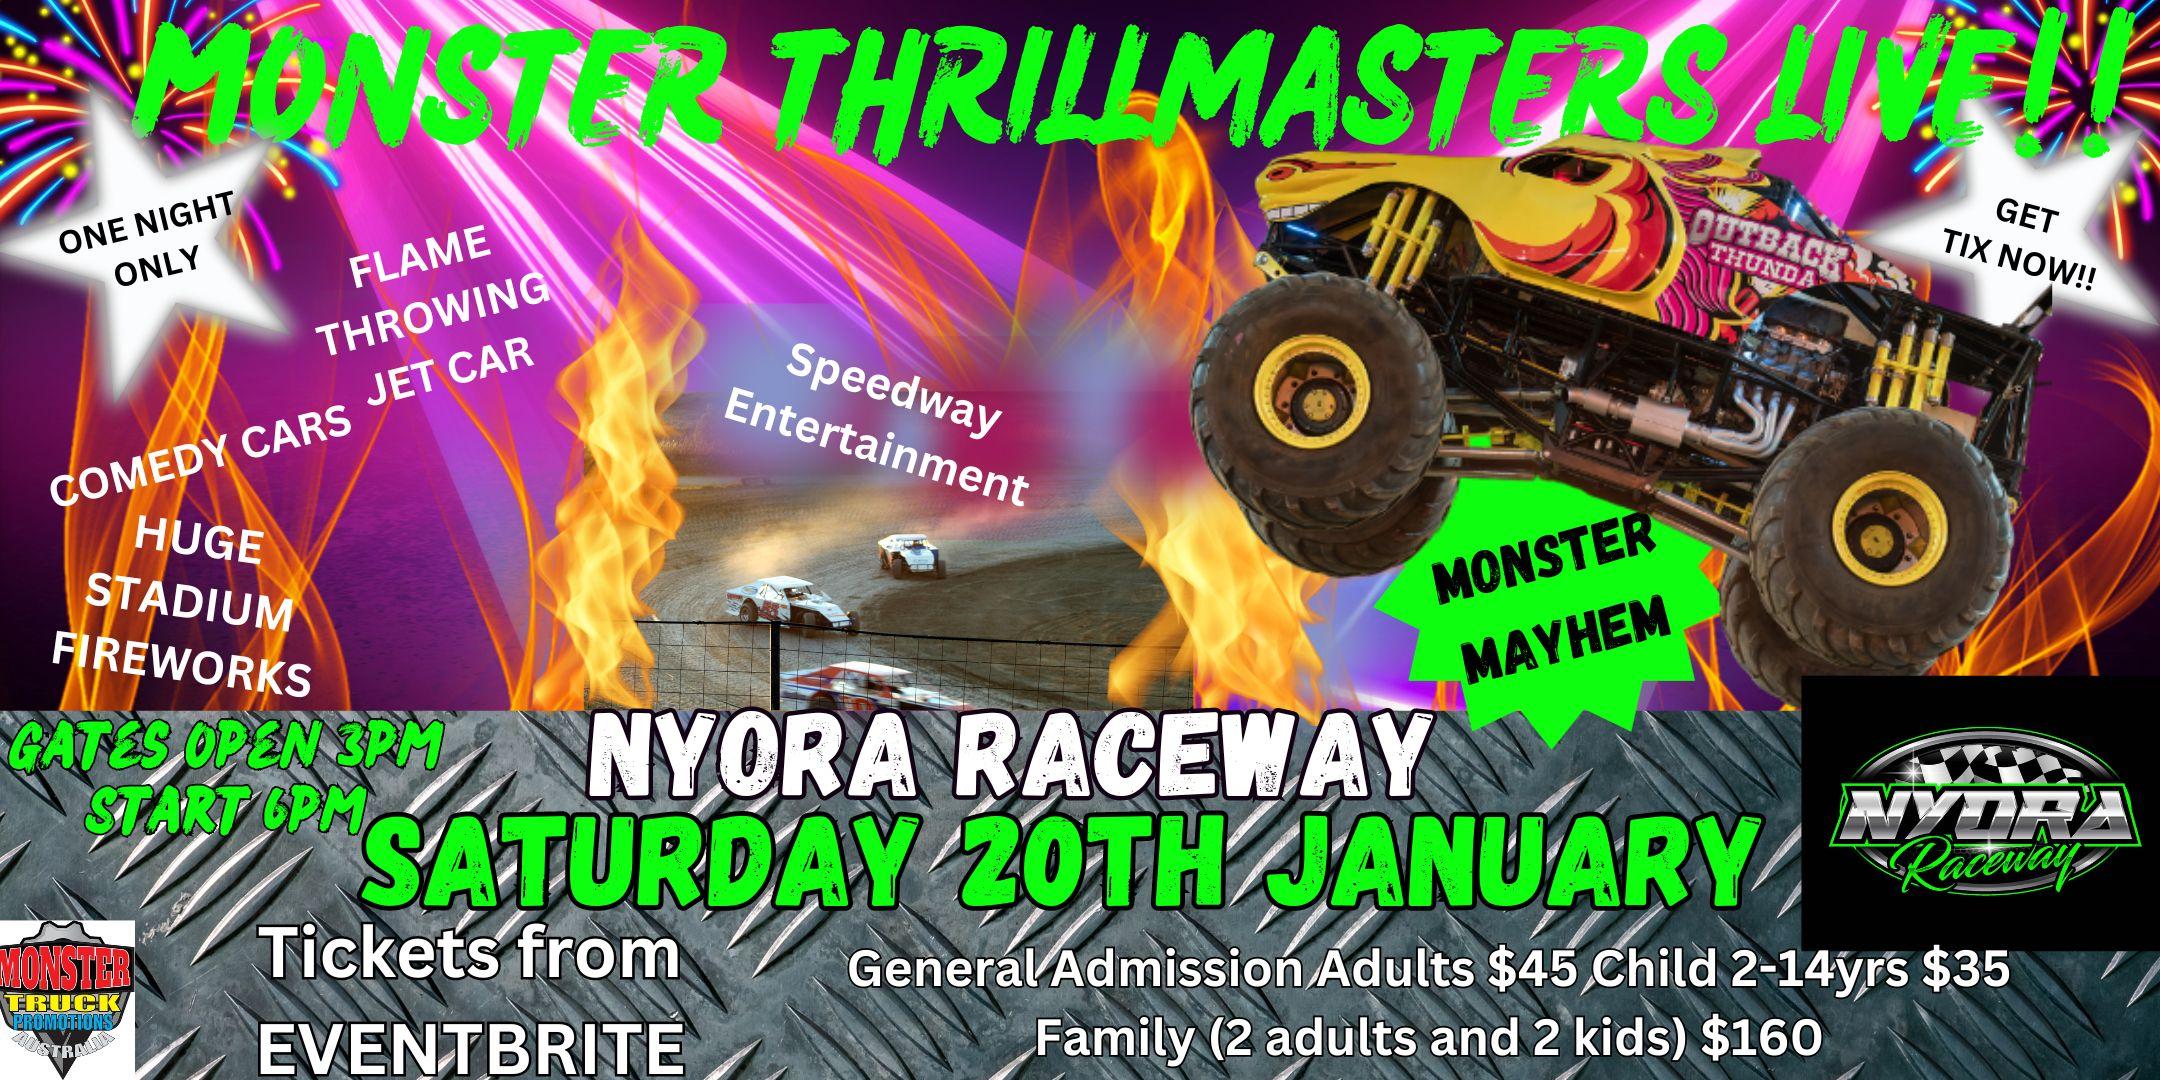 Monster Thrillmasters LIVE! NYORA RACEWAY